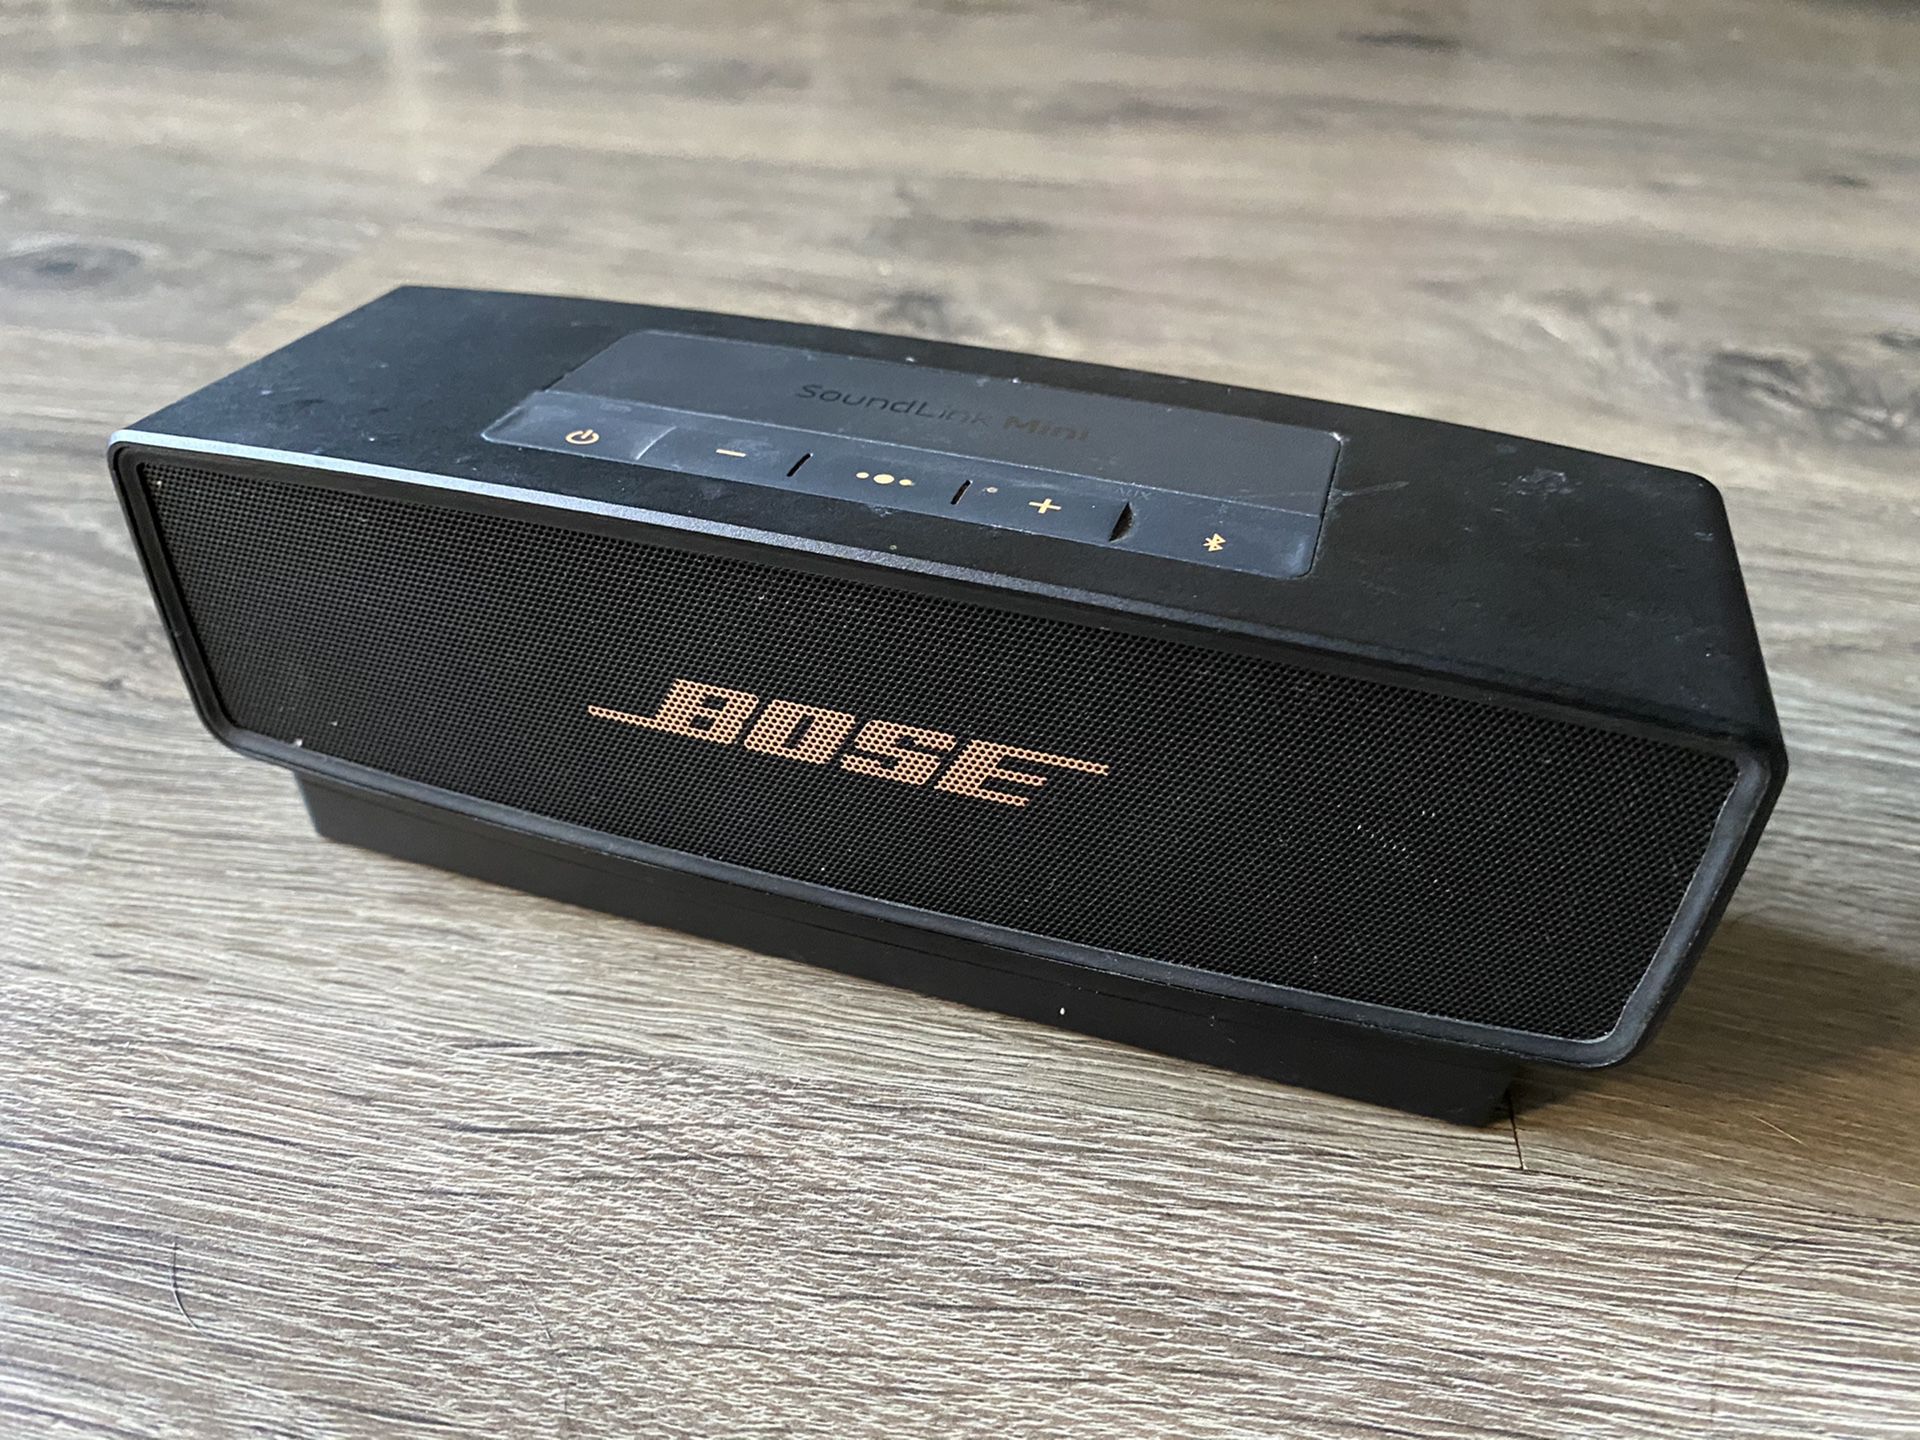 Bose Soundlink II Speaker